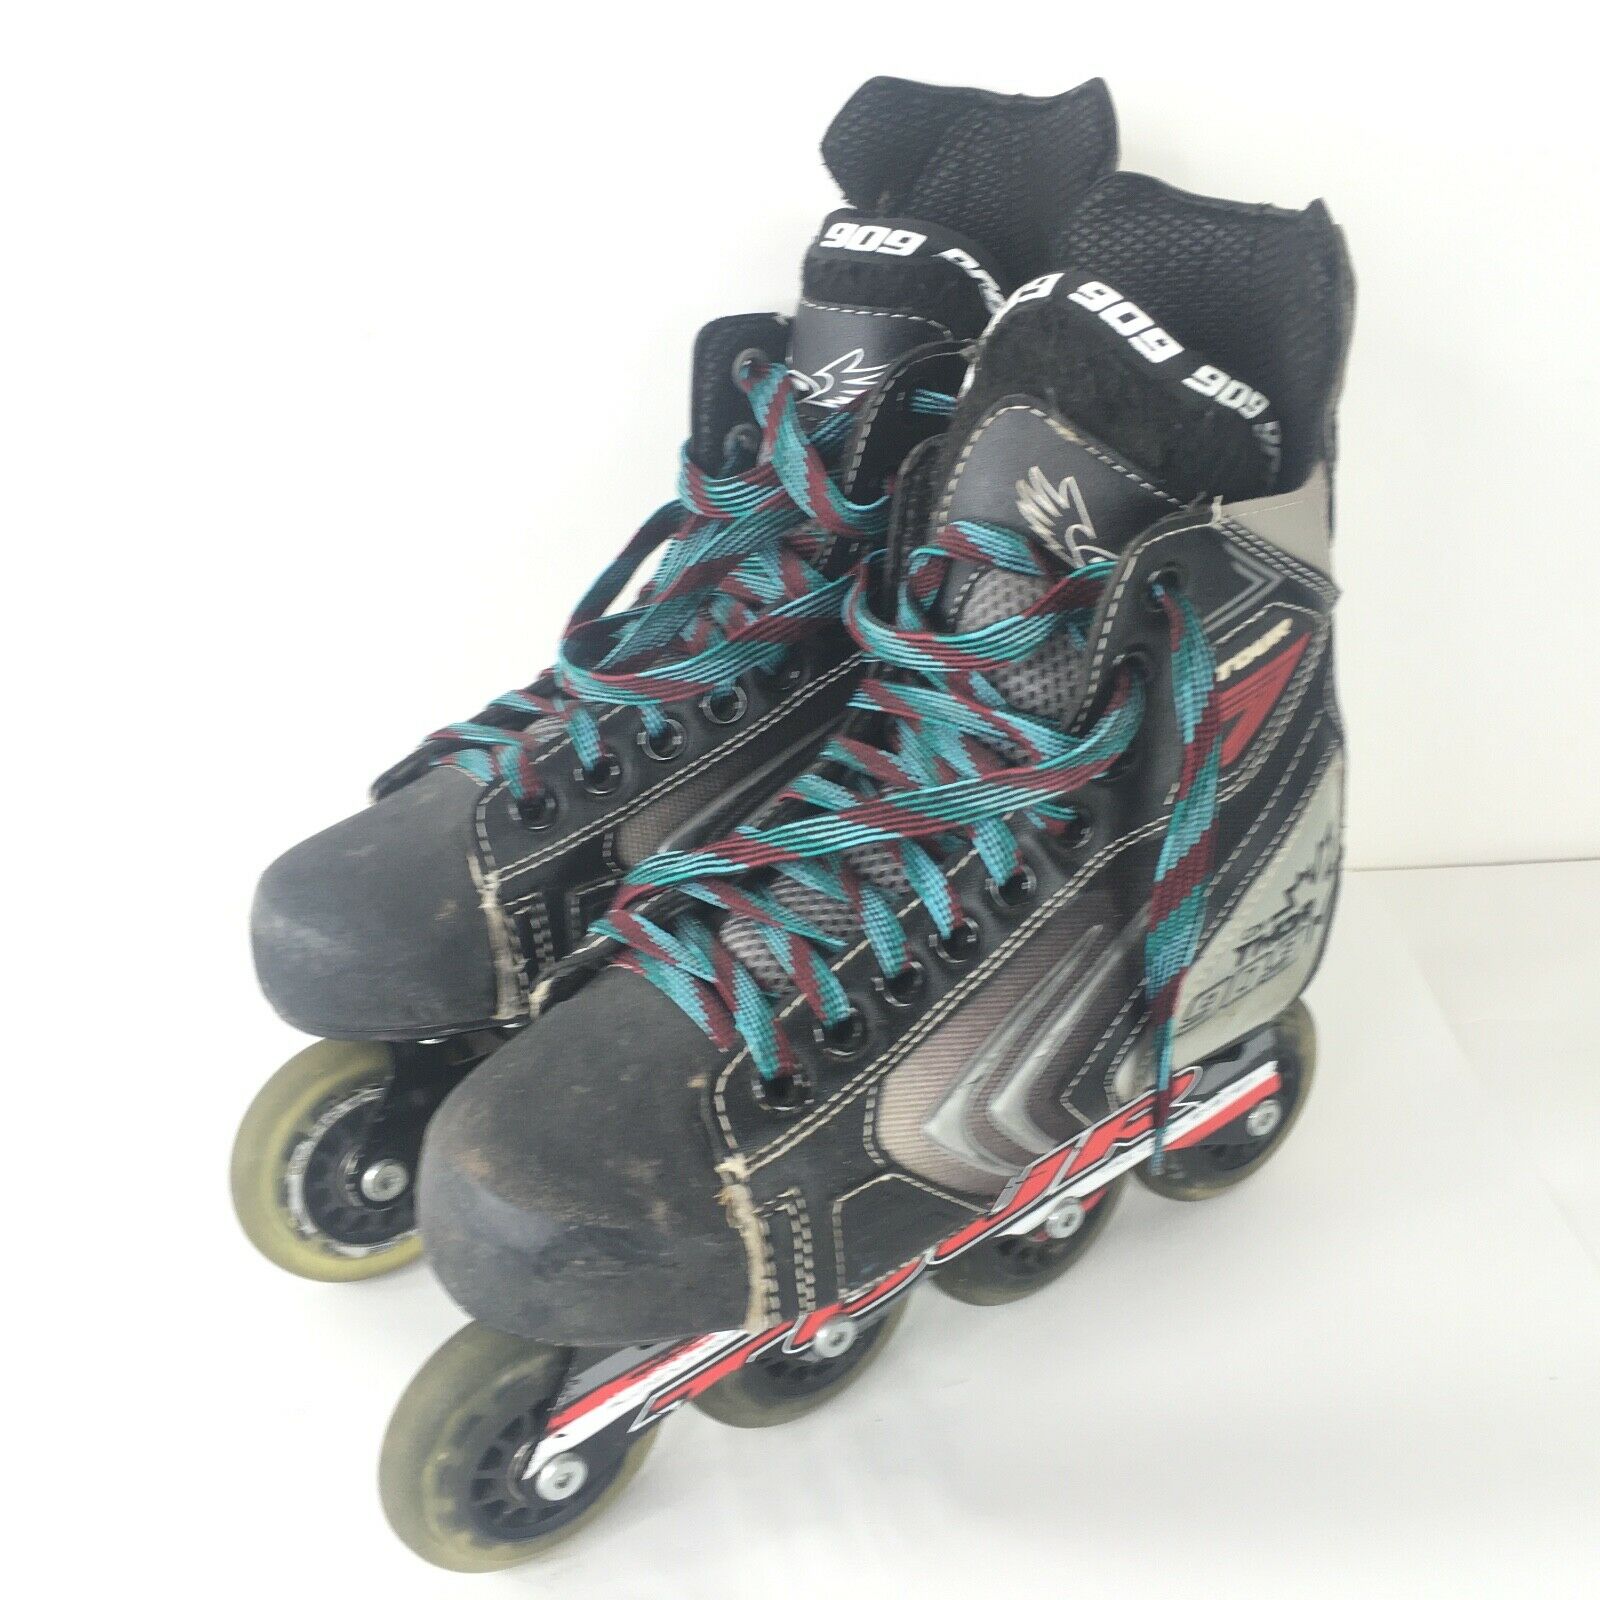 Tour Thor 909 Cdn Roler Hockey Skates Blades Inline Skates Mens Size 6 Eur 39